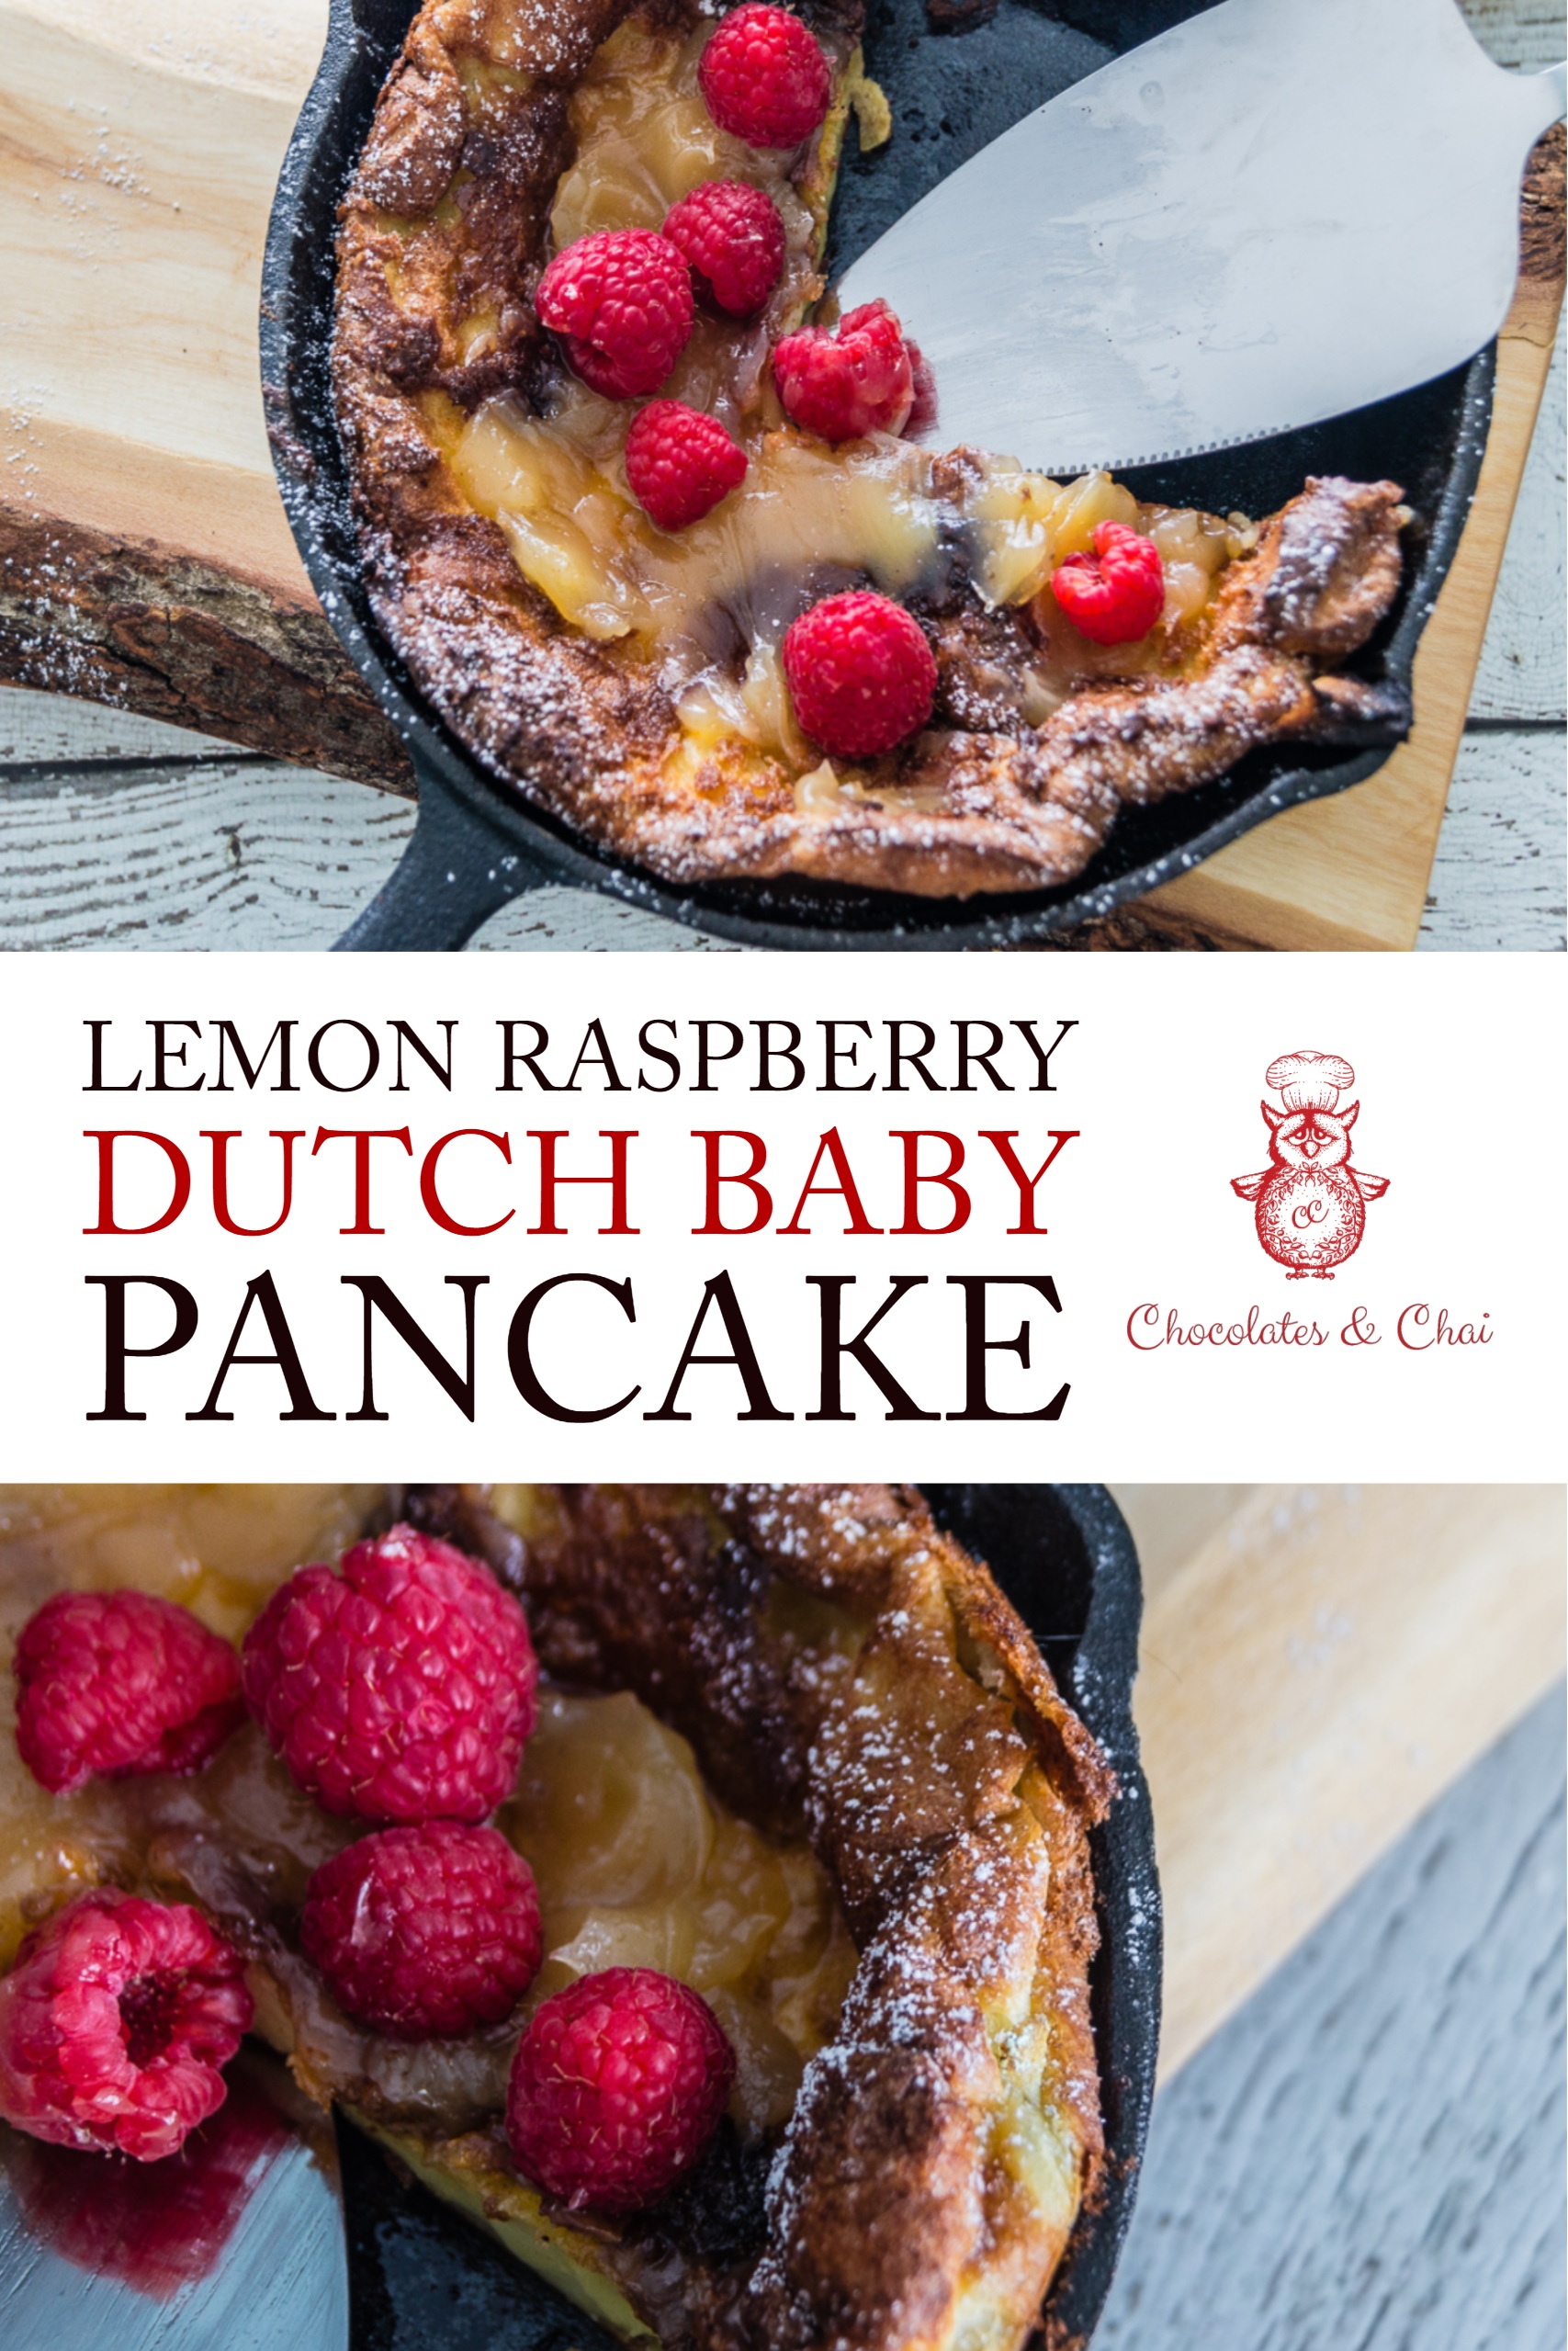 Lemon Raspberry Dutch Baby Pancake - Chocolates & Chai